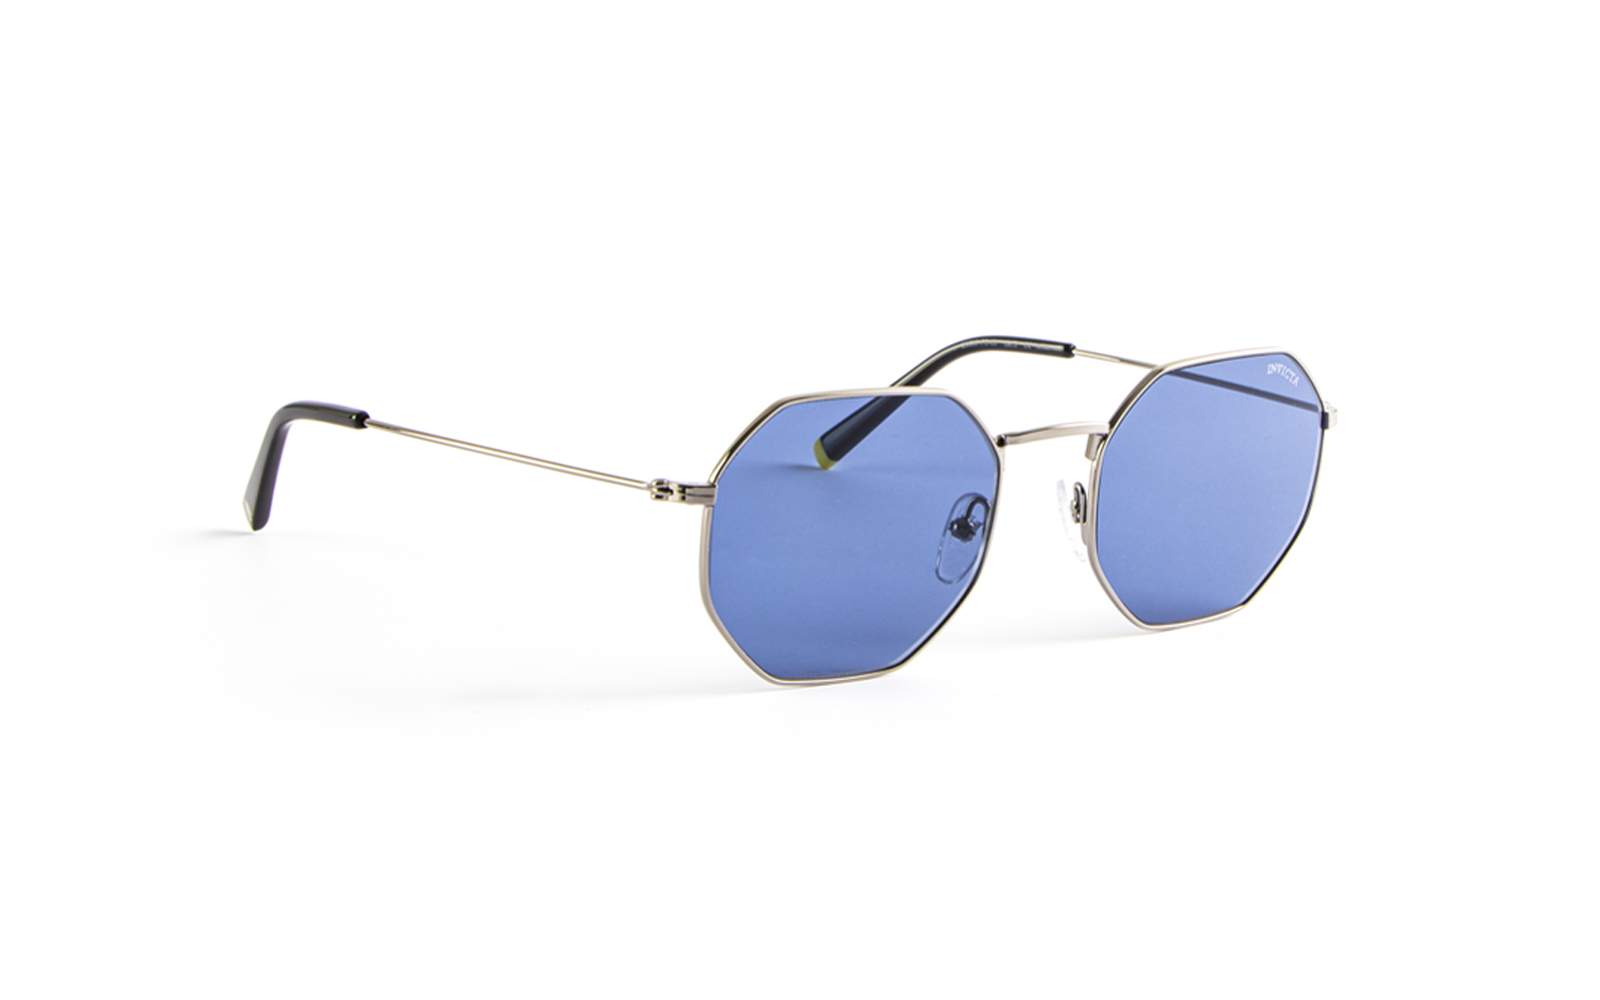 Invicta Men's I-Force Octagonal Sunglasses, Blue (29606-IFO-03)